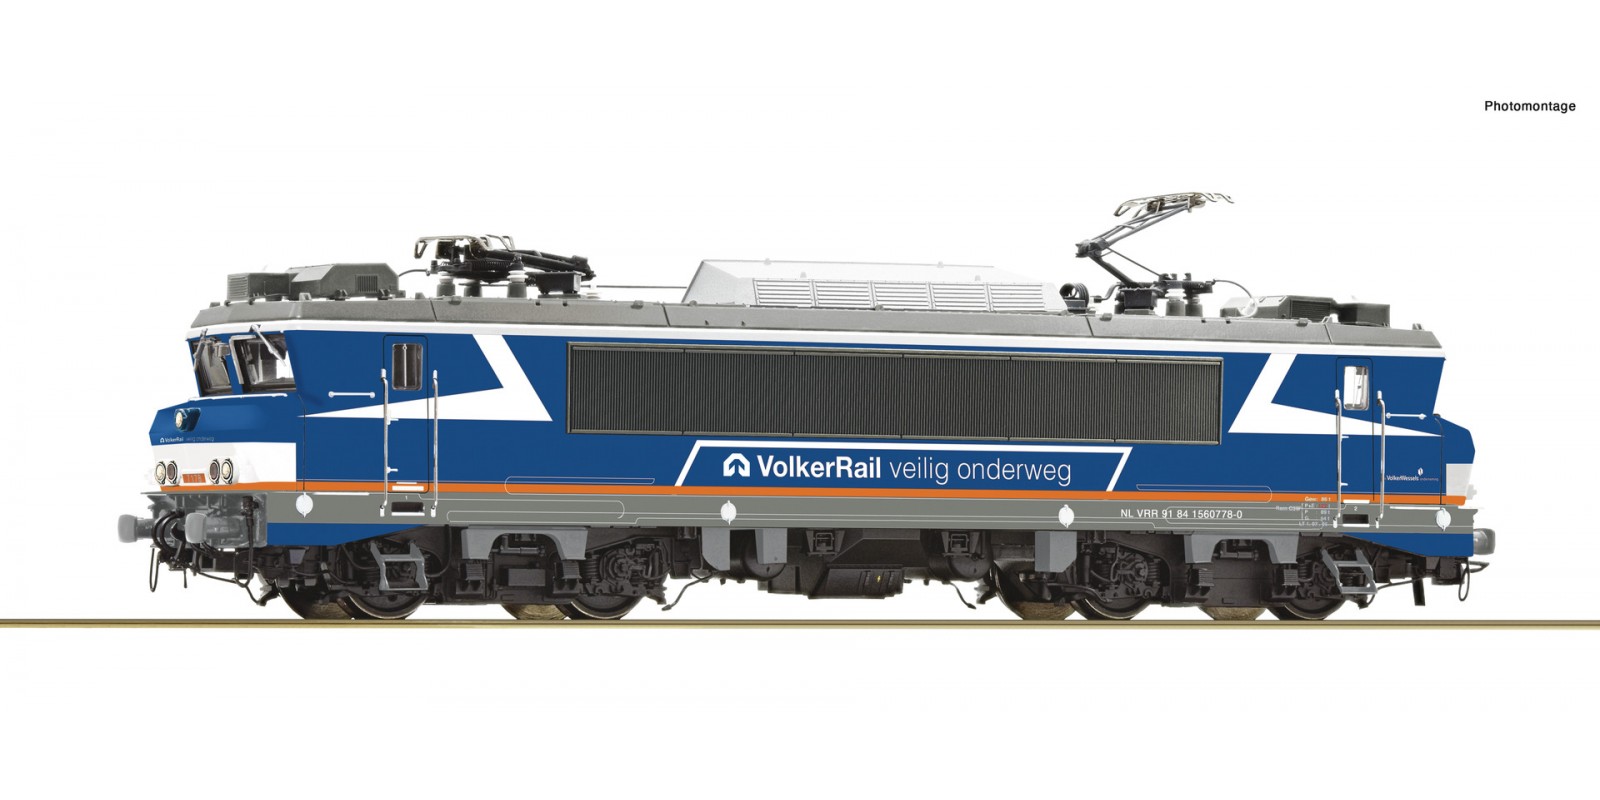 RO7520010 Electric locomotive 7178, VolkerRail